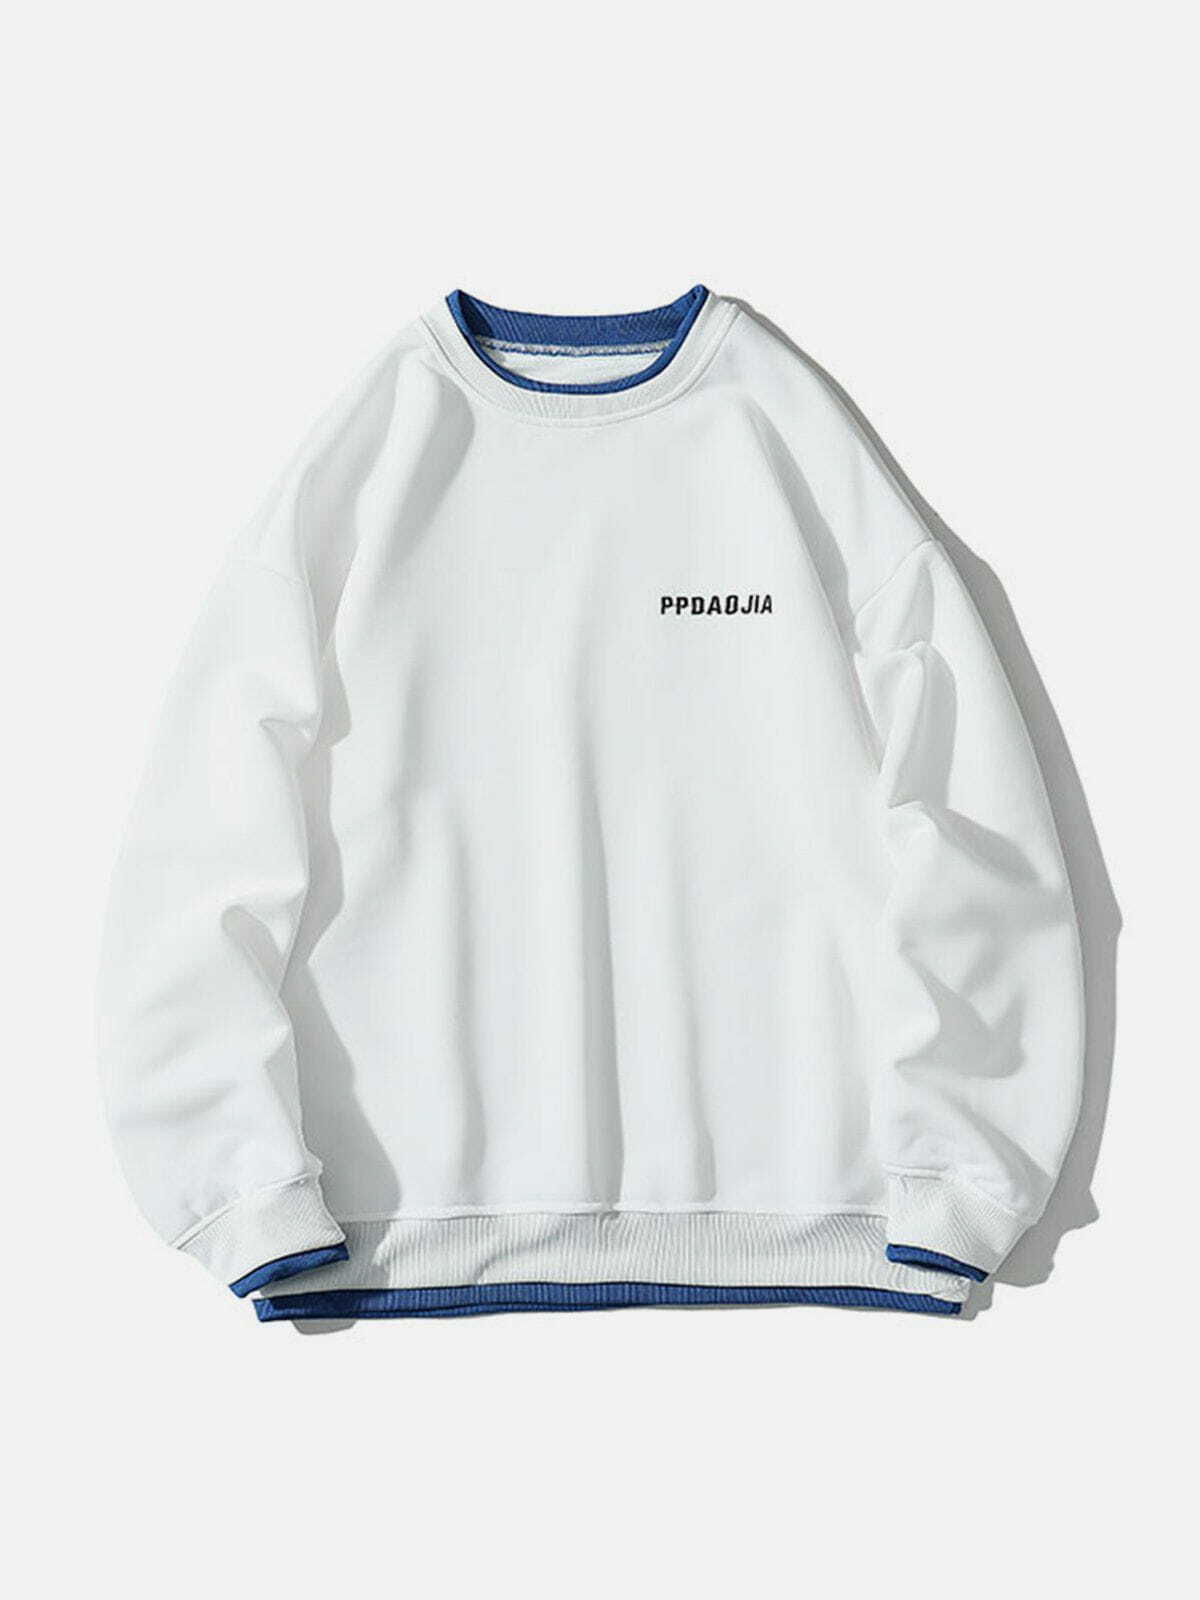 youthful fake two sweatshirt edgy  retro streetwear top 4041